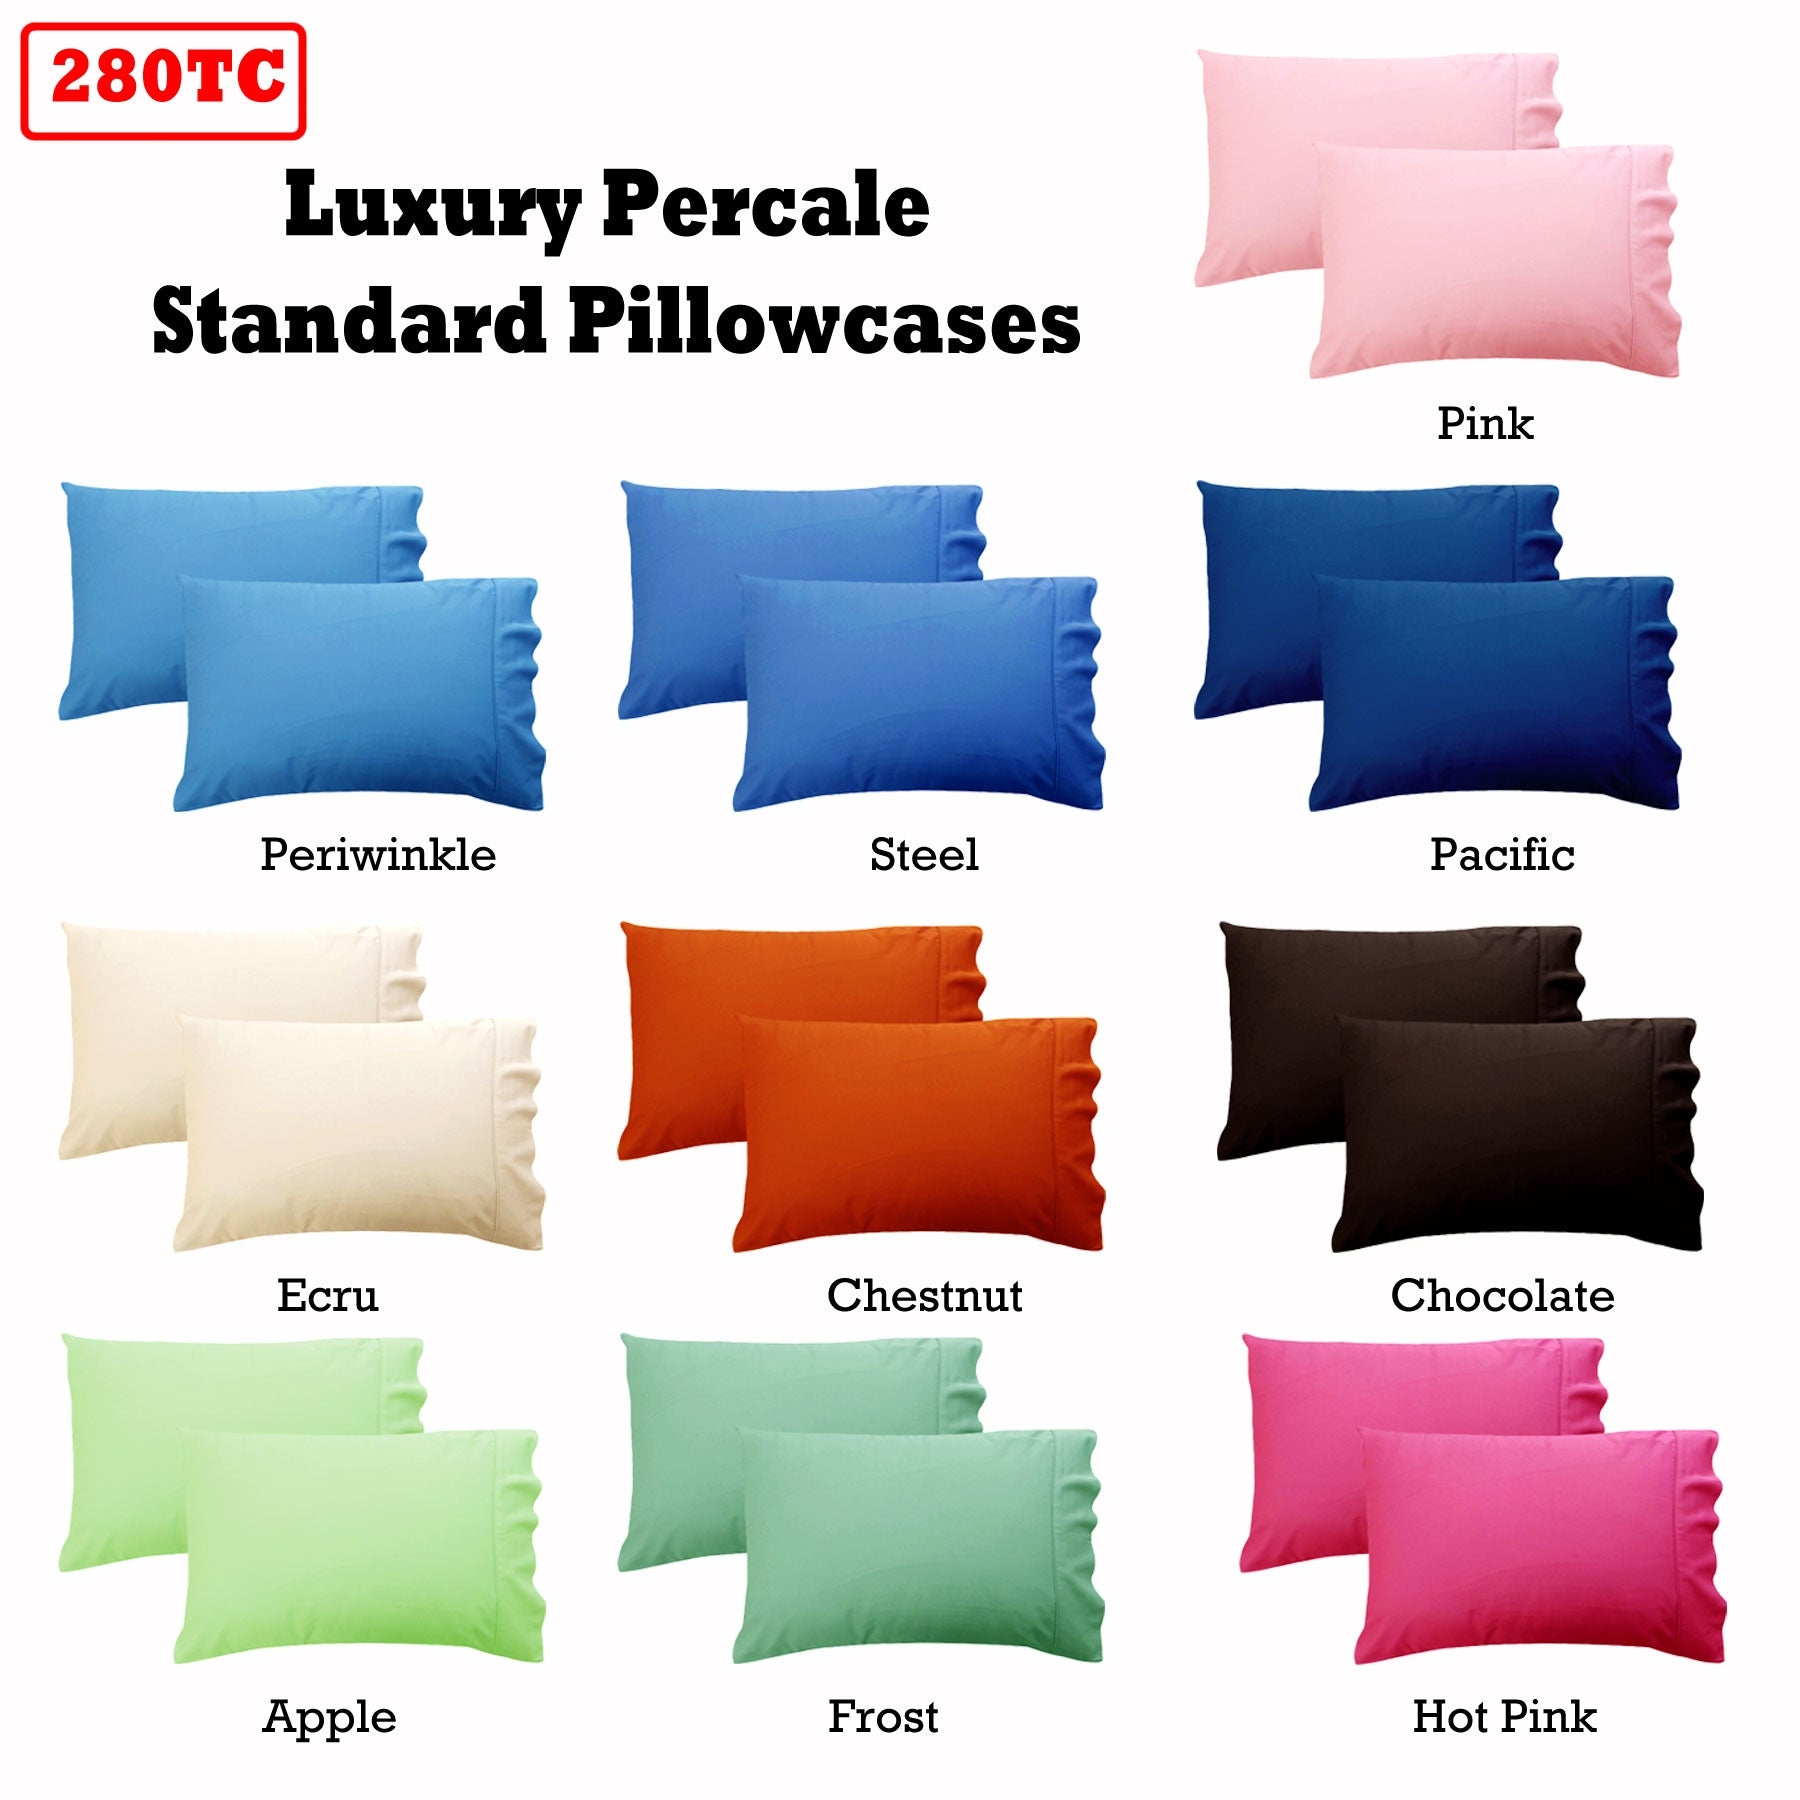 280TC Luxury Percale Standard Pillowcases Ecru - 0